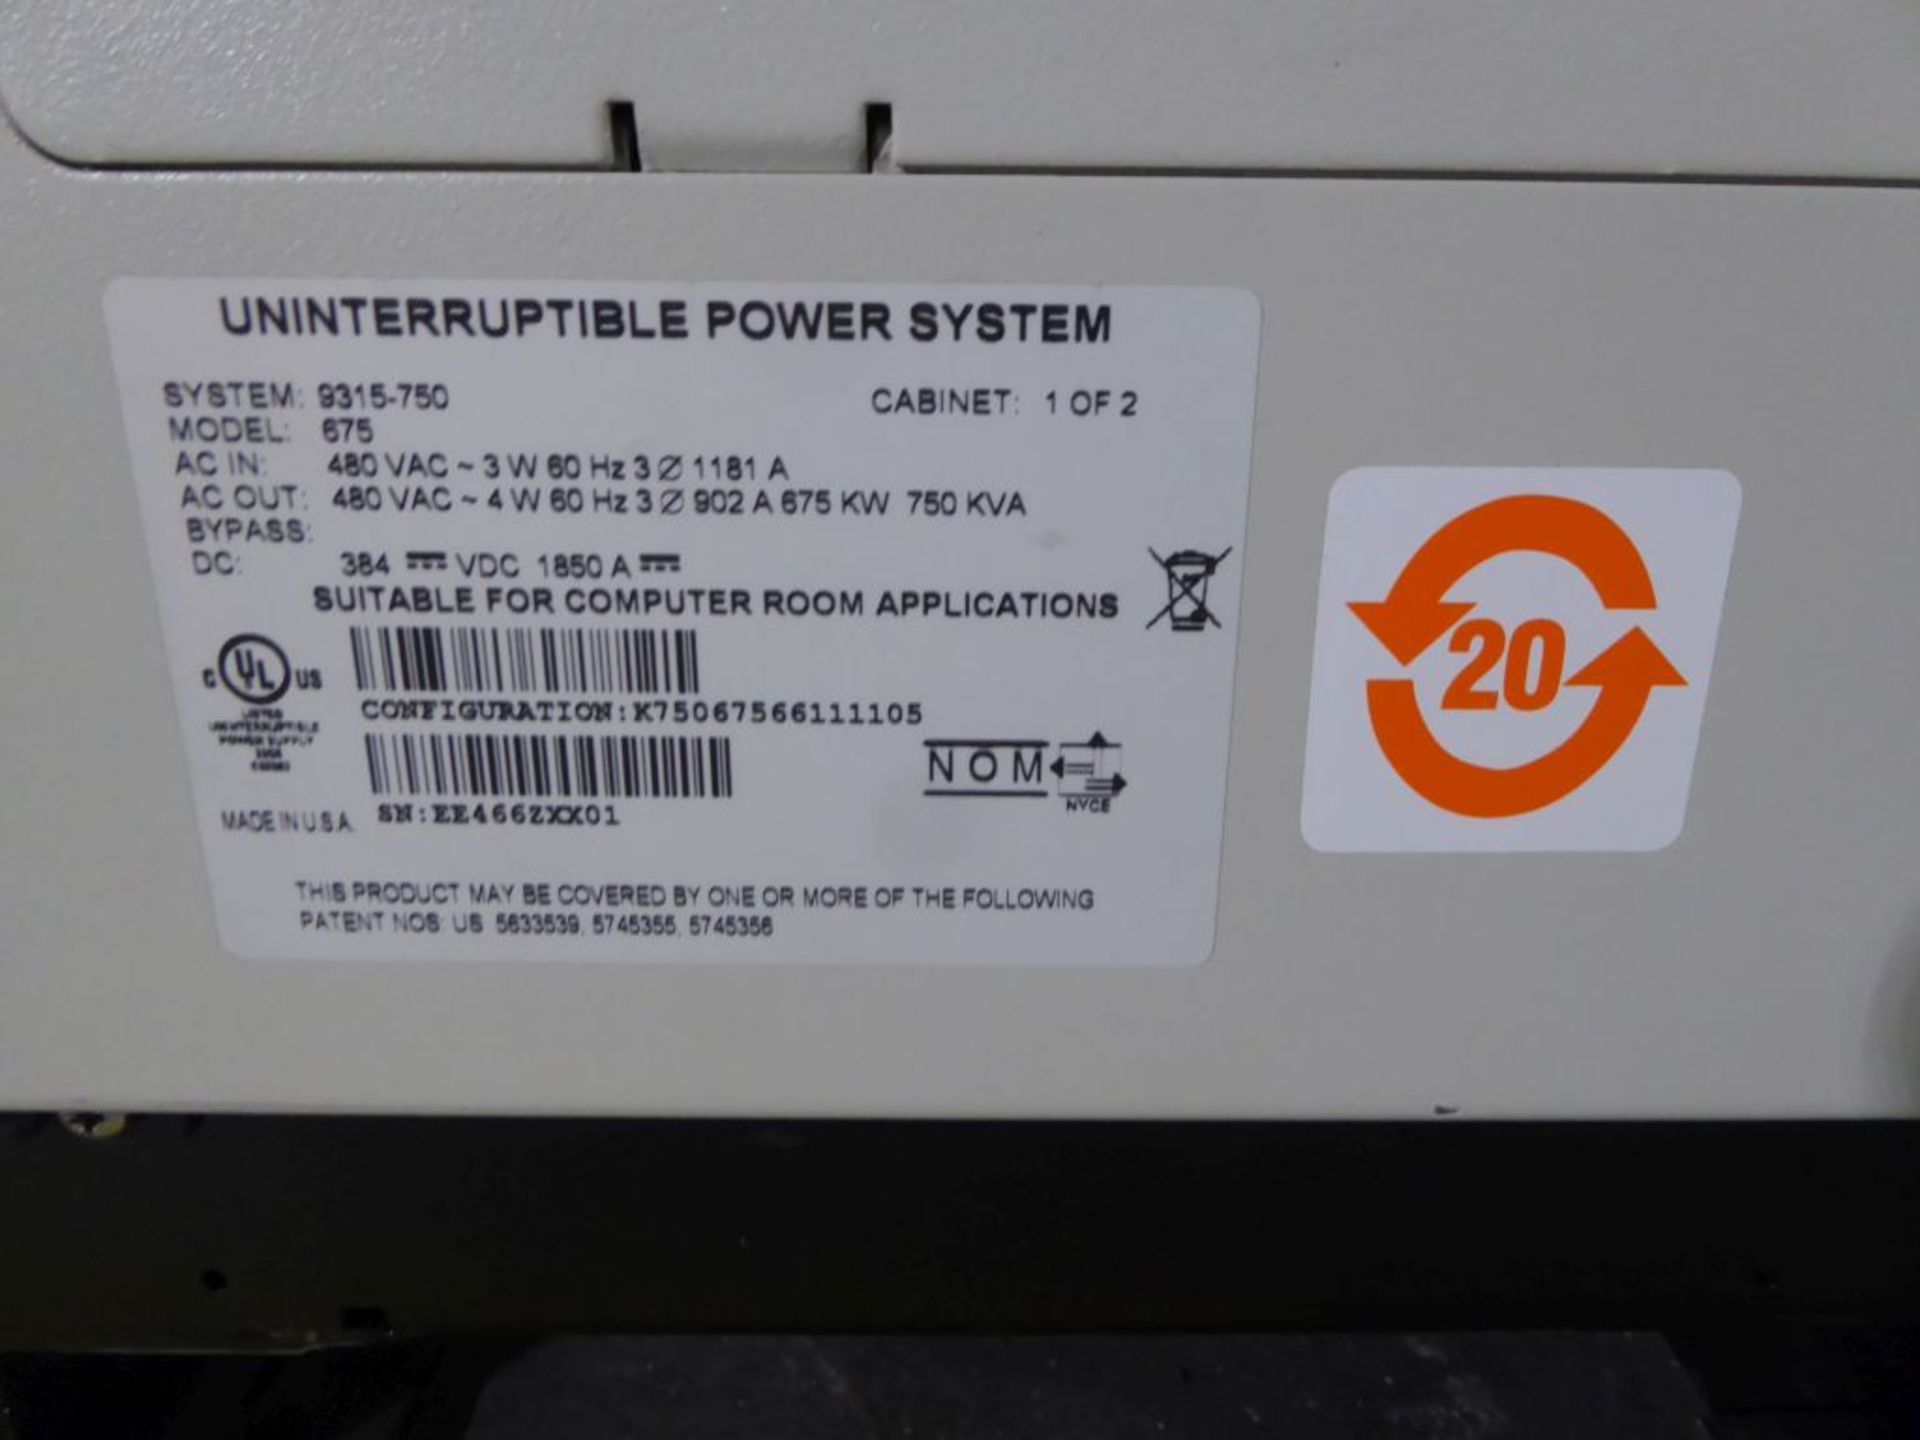 Charlotte, NC - Powerware Uniinterruptable Power System - Image 3 of 3